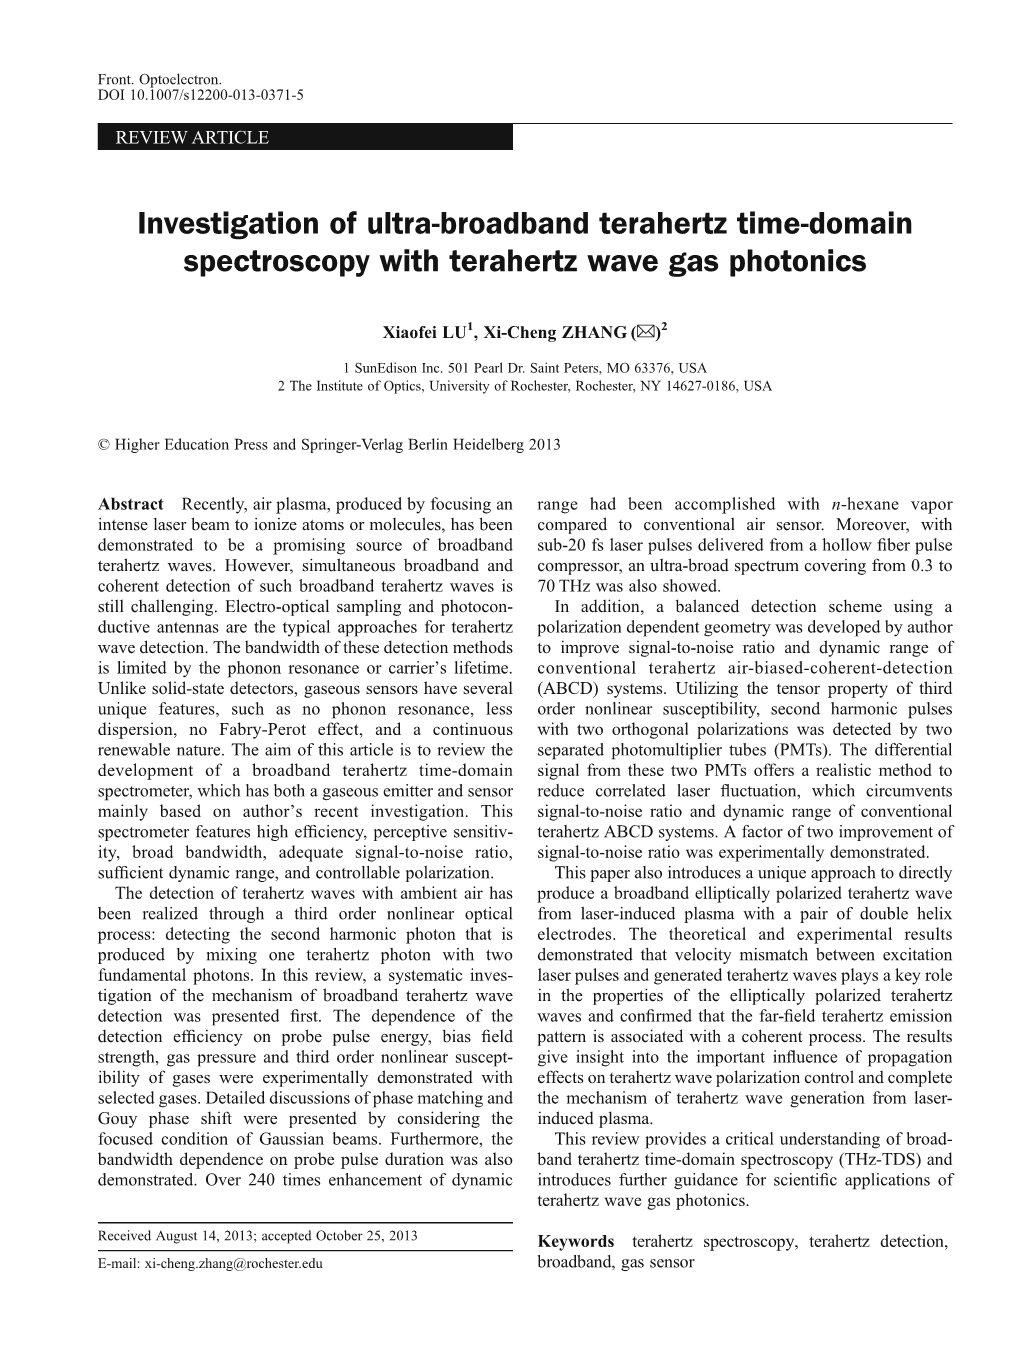 Investigation of Ultra-Broadband Terahertz Time-Domain Spectroscopy with Terahertz Wave Gas Photonics